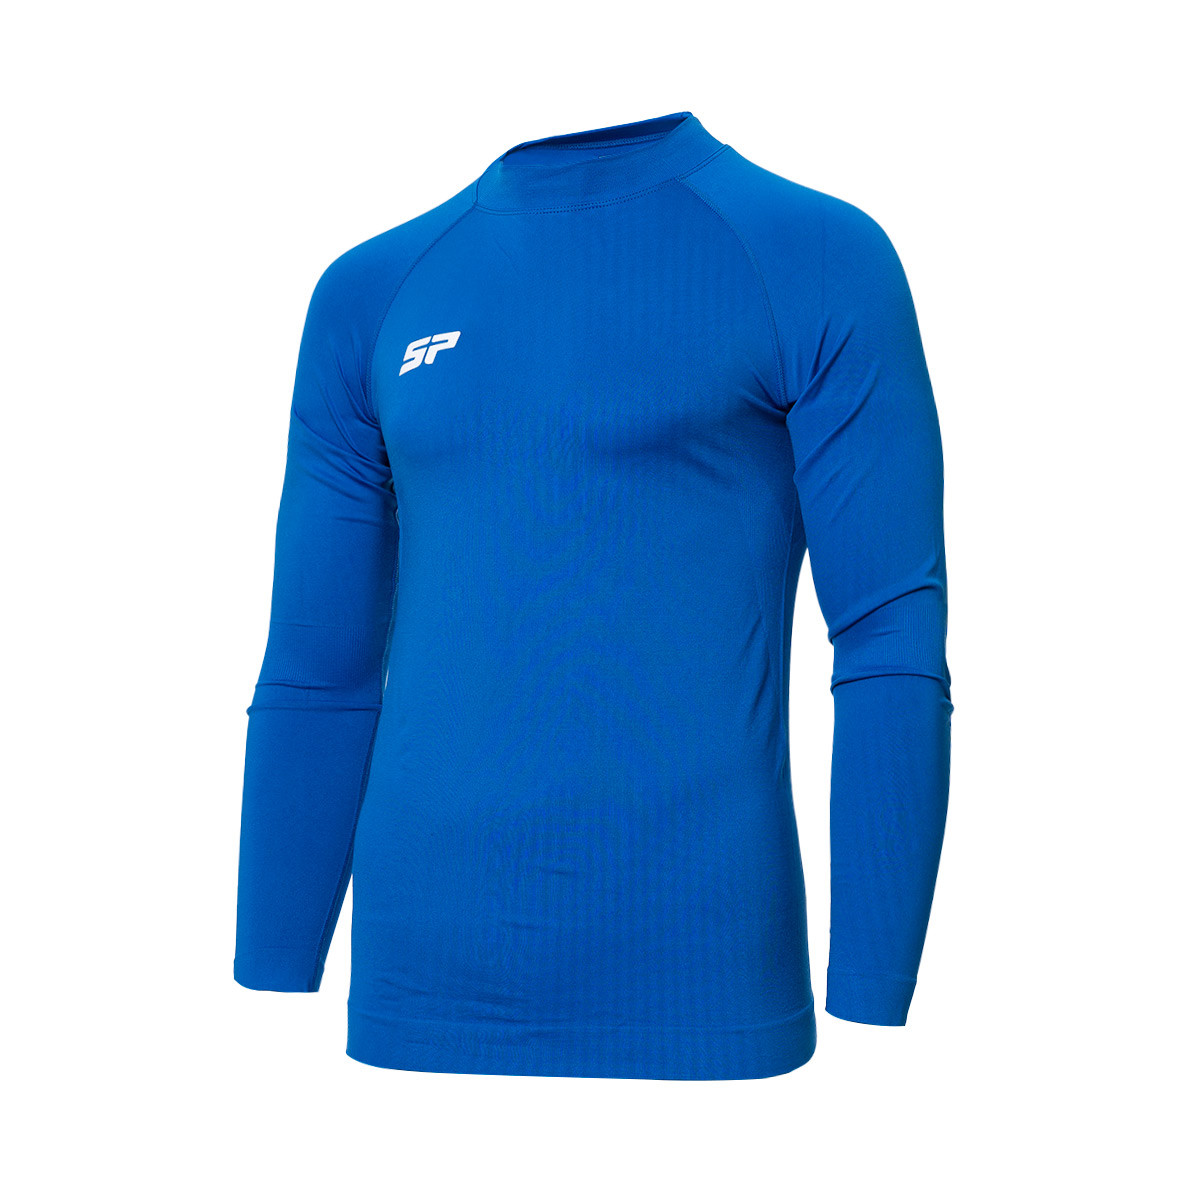 Rechazar Mayor llevar a cabo Camiseta SP Fútbol Térmica Azul Royal - Fútbol Emotion